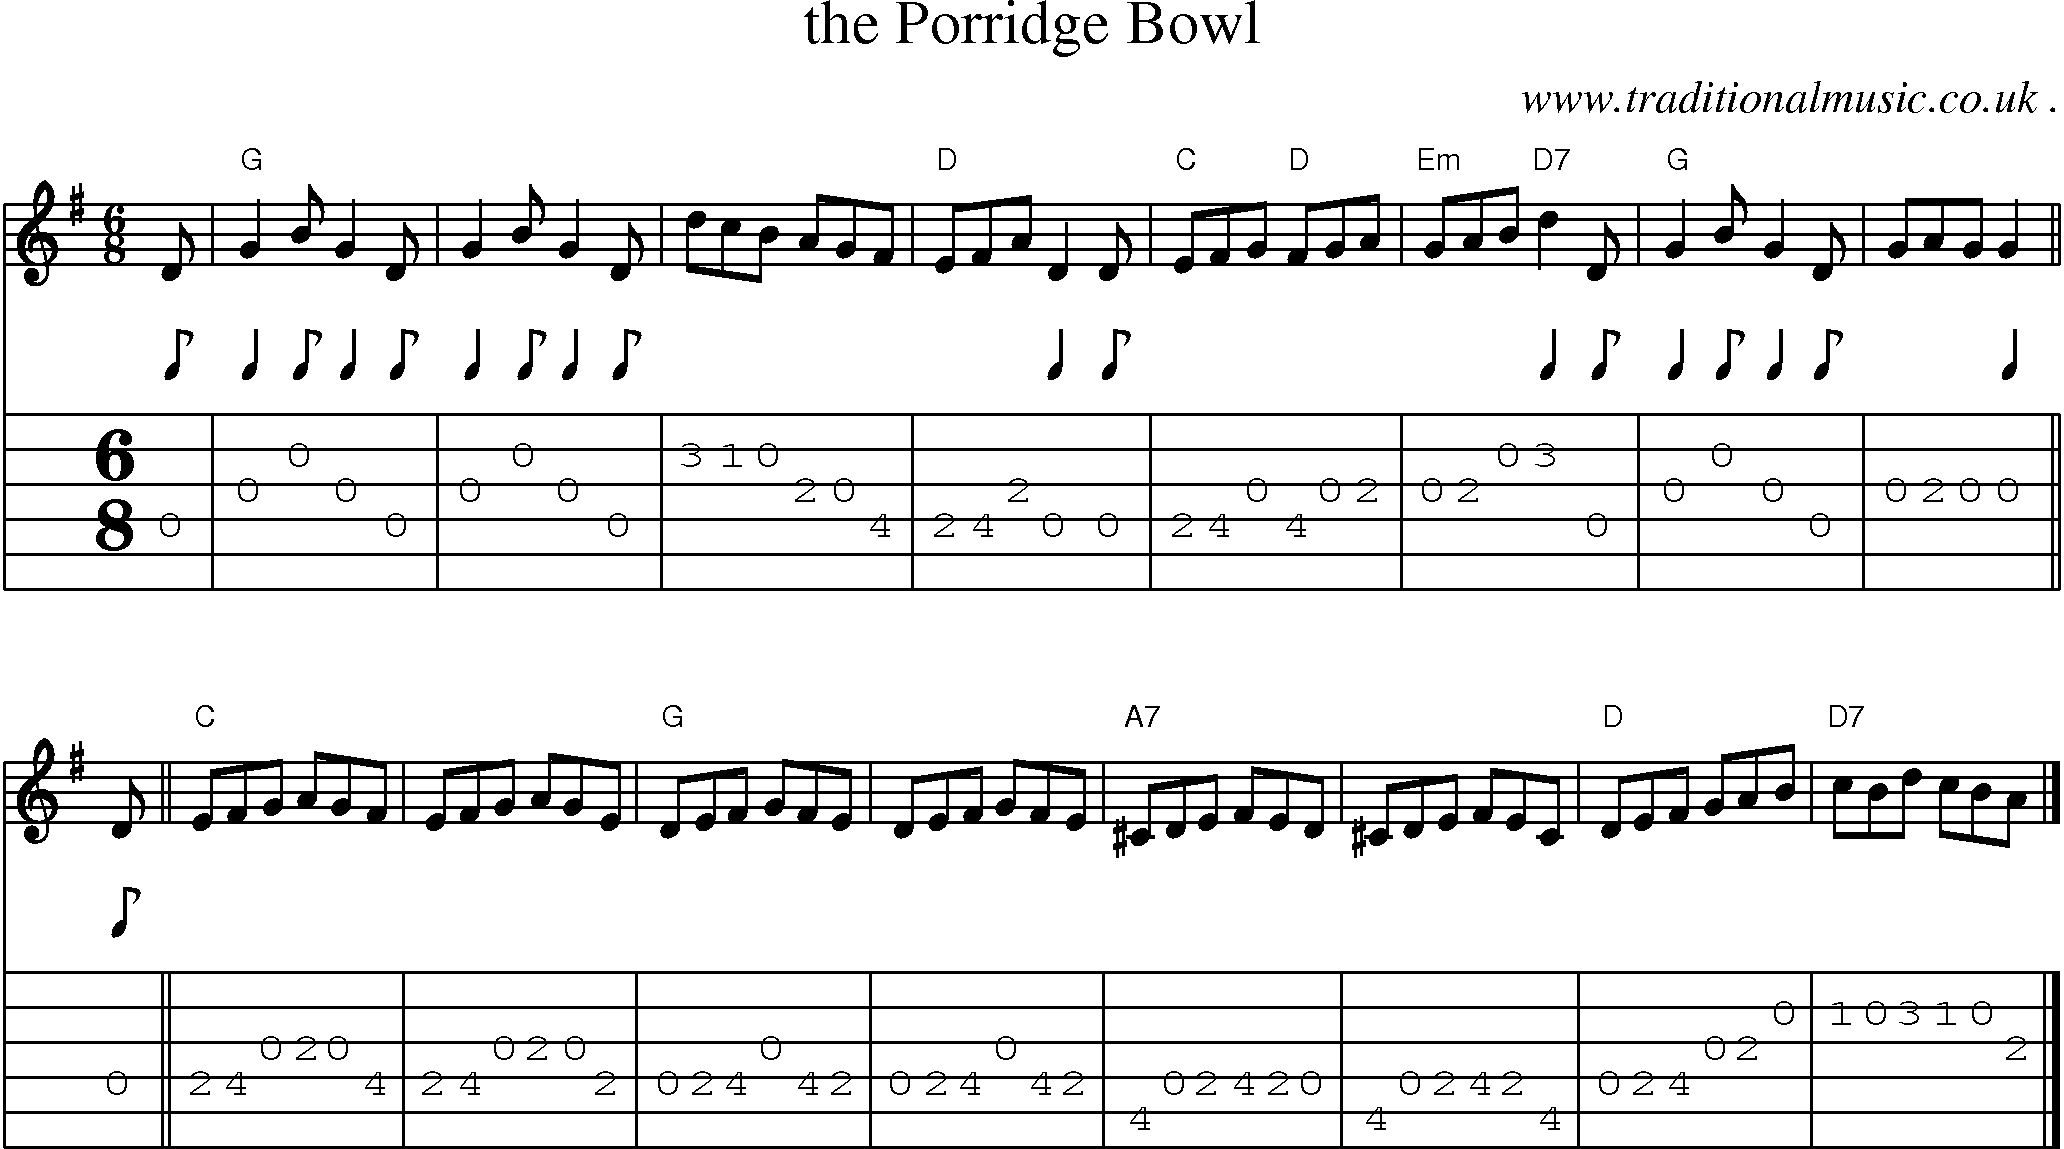 Sheet-music  score, Chords and Guitar Tabs for The Porridge Bowl